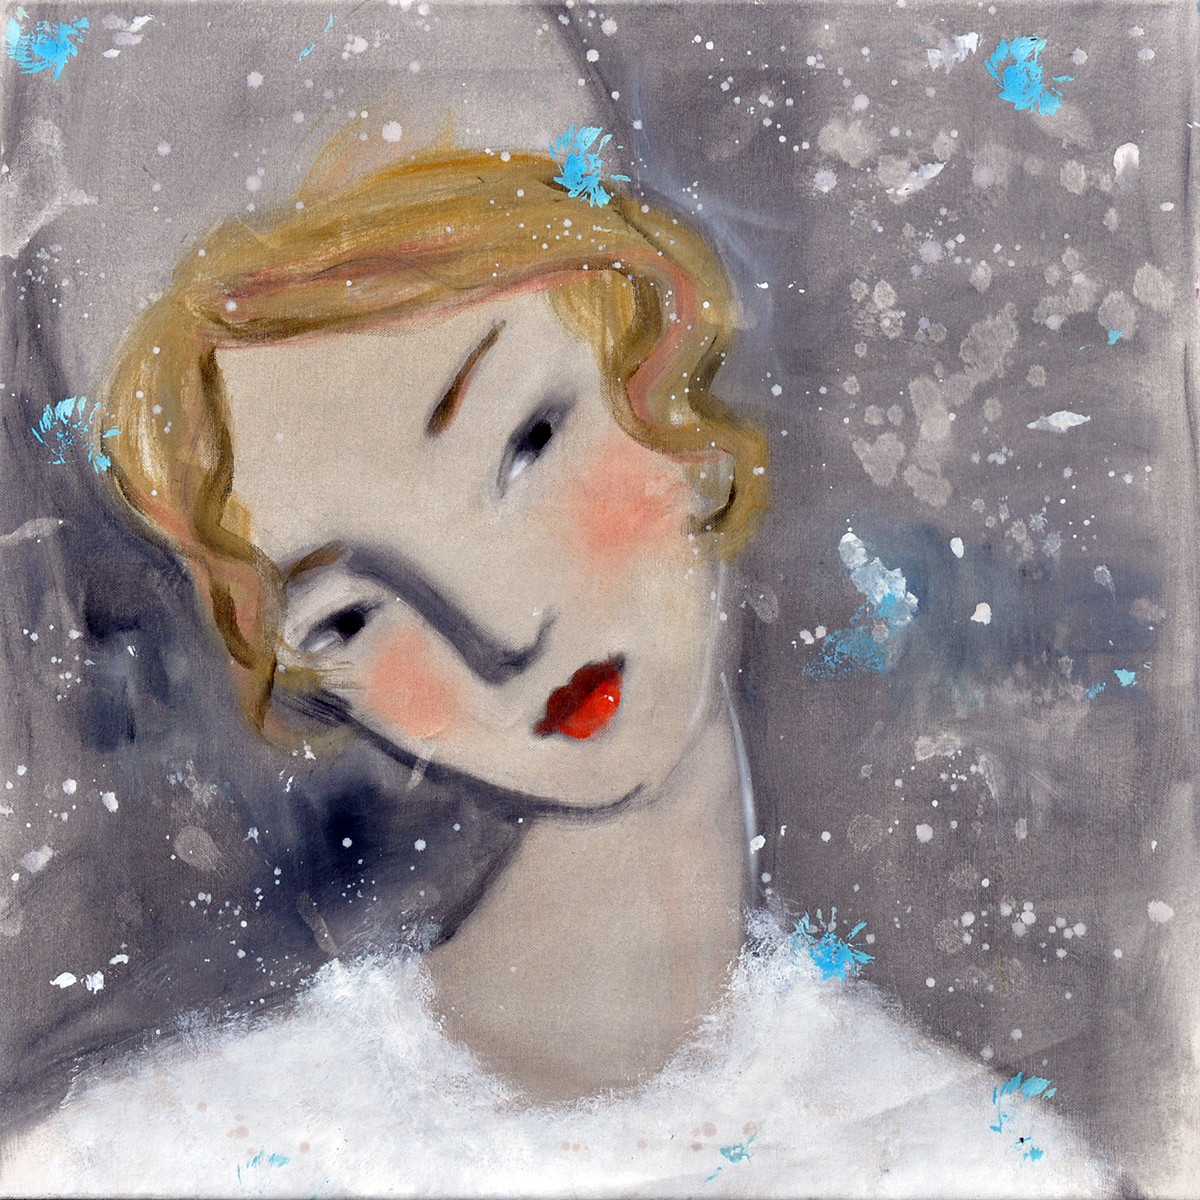 Merja Niemelainen + Snowworld